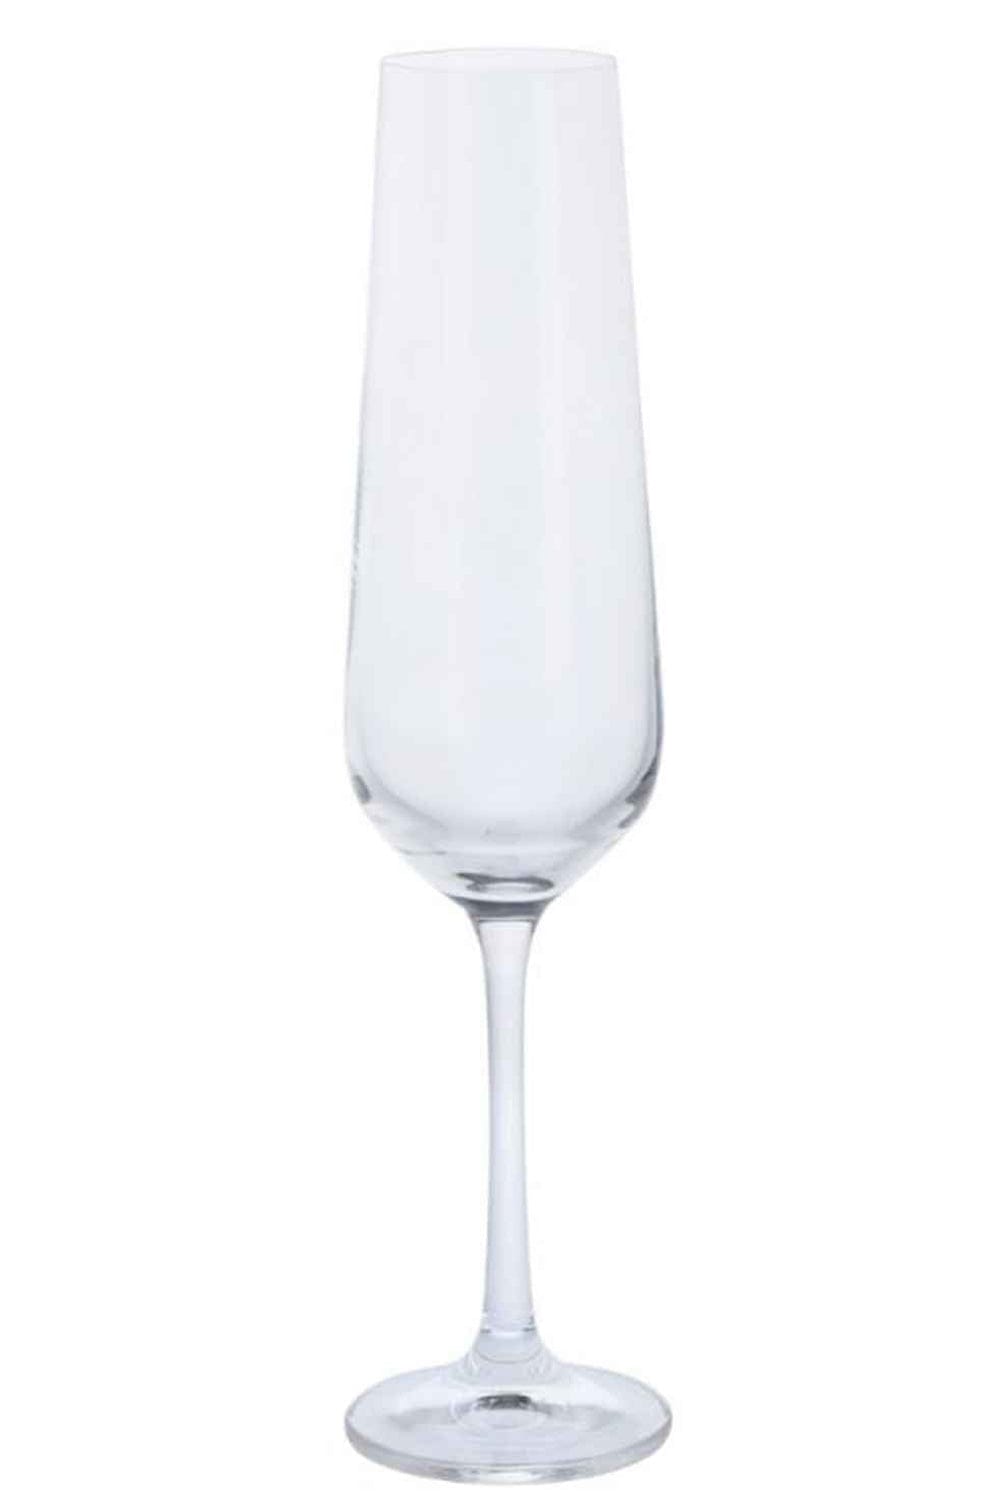 Dartington Cheers Flute Glass- Set of 4